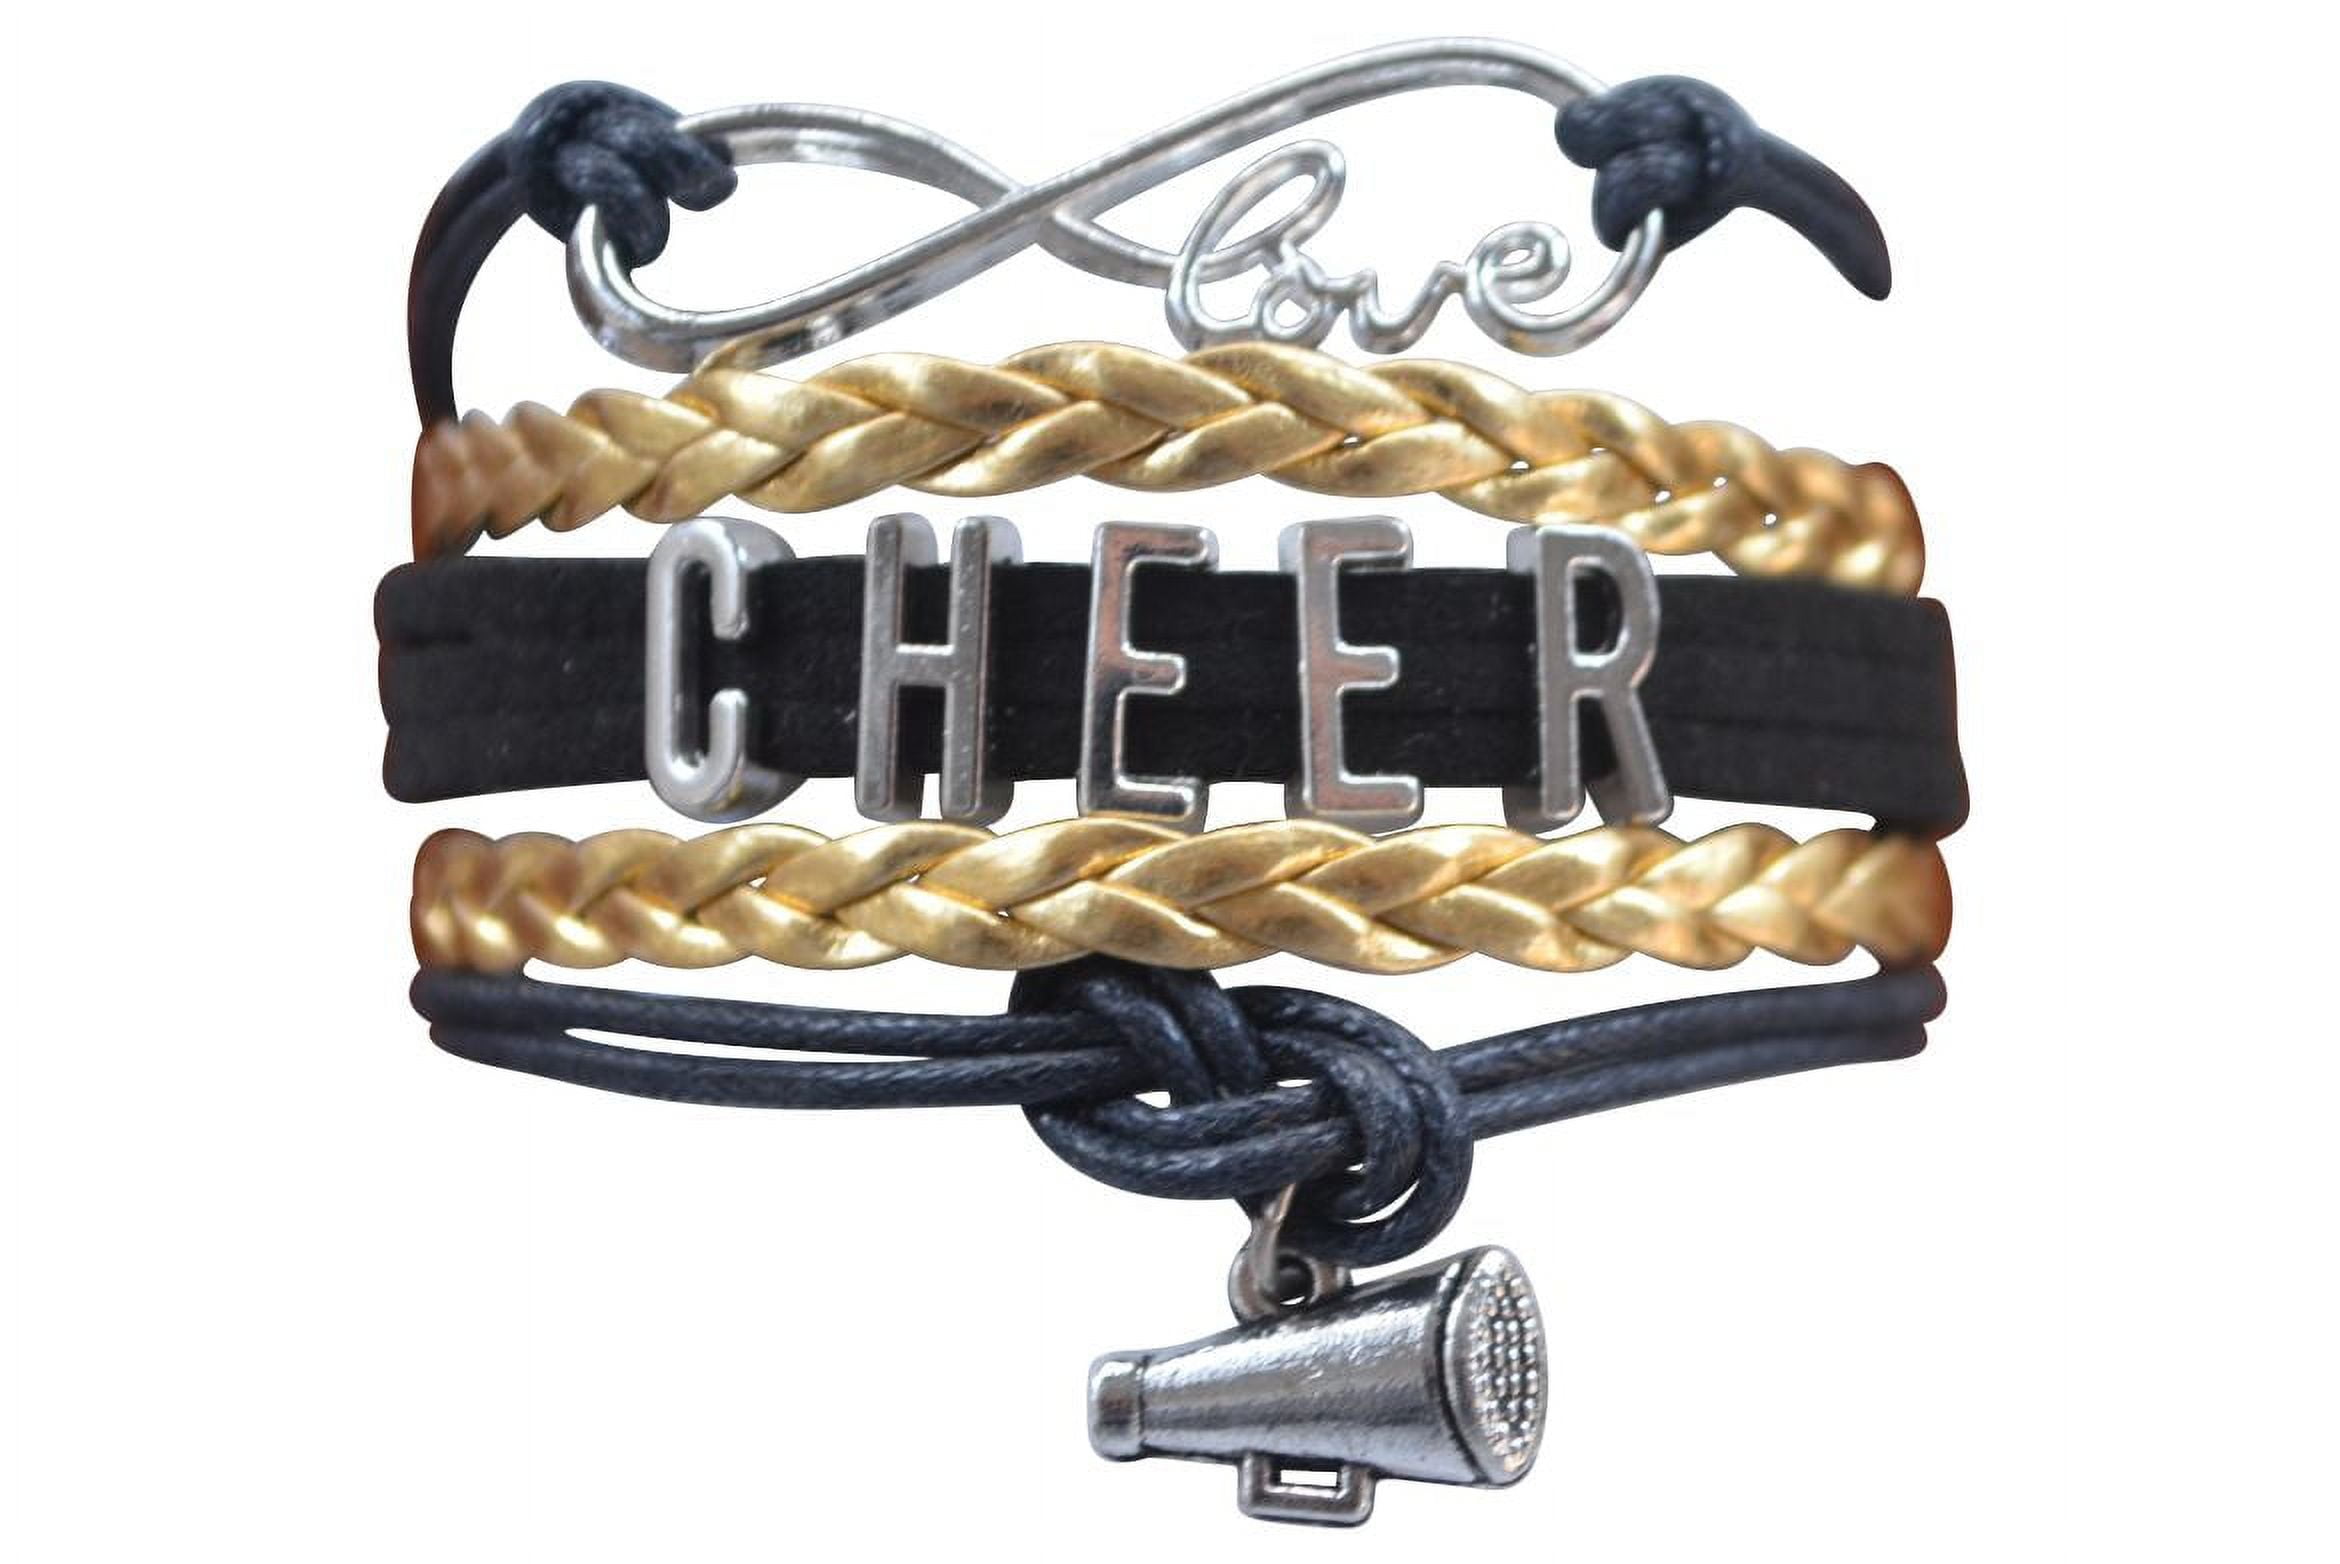 20pcs--I love to cheer charms, Cheerleader Megaphone Charm pendants, Cheer,  16x14mm - AliExpress